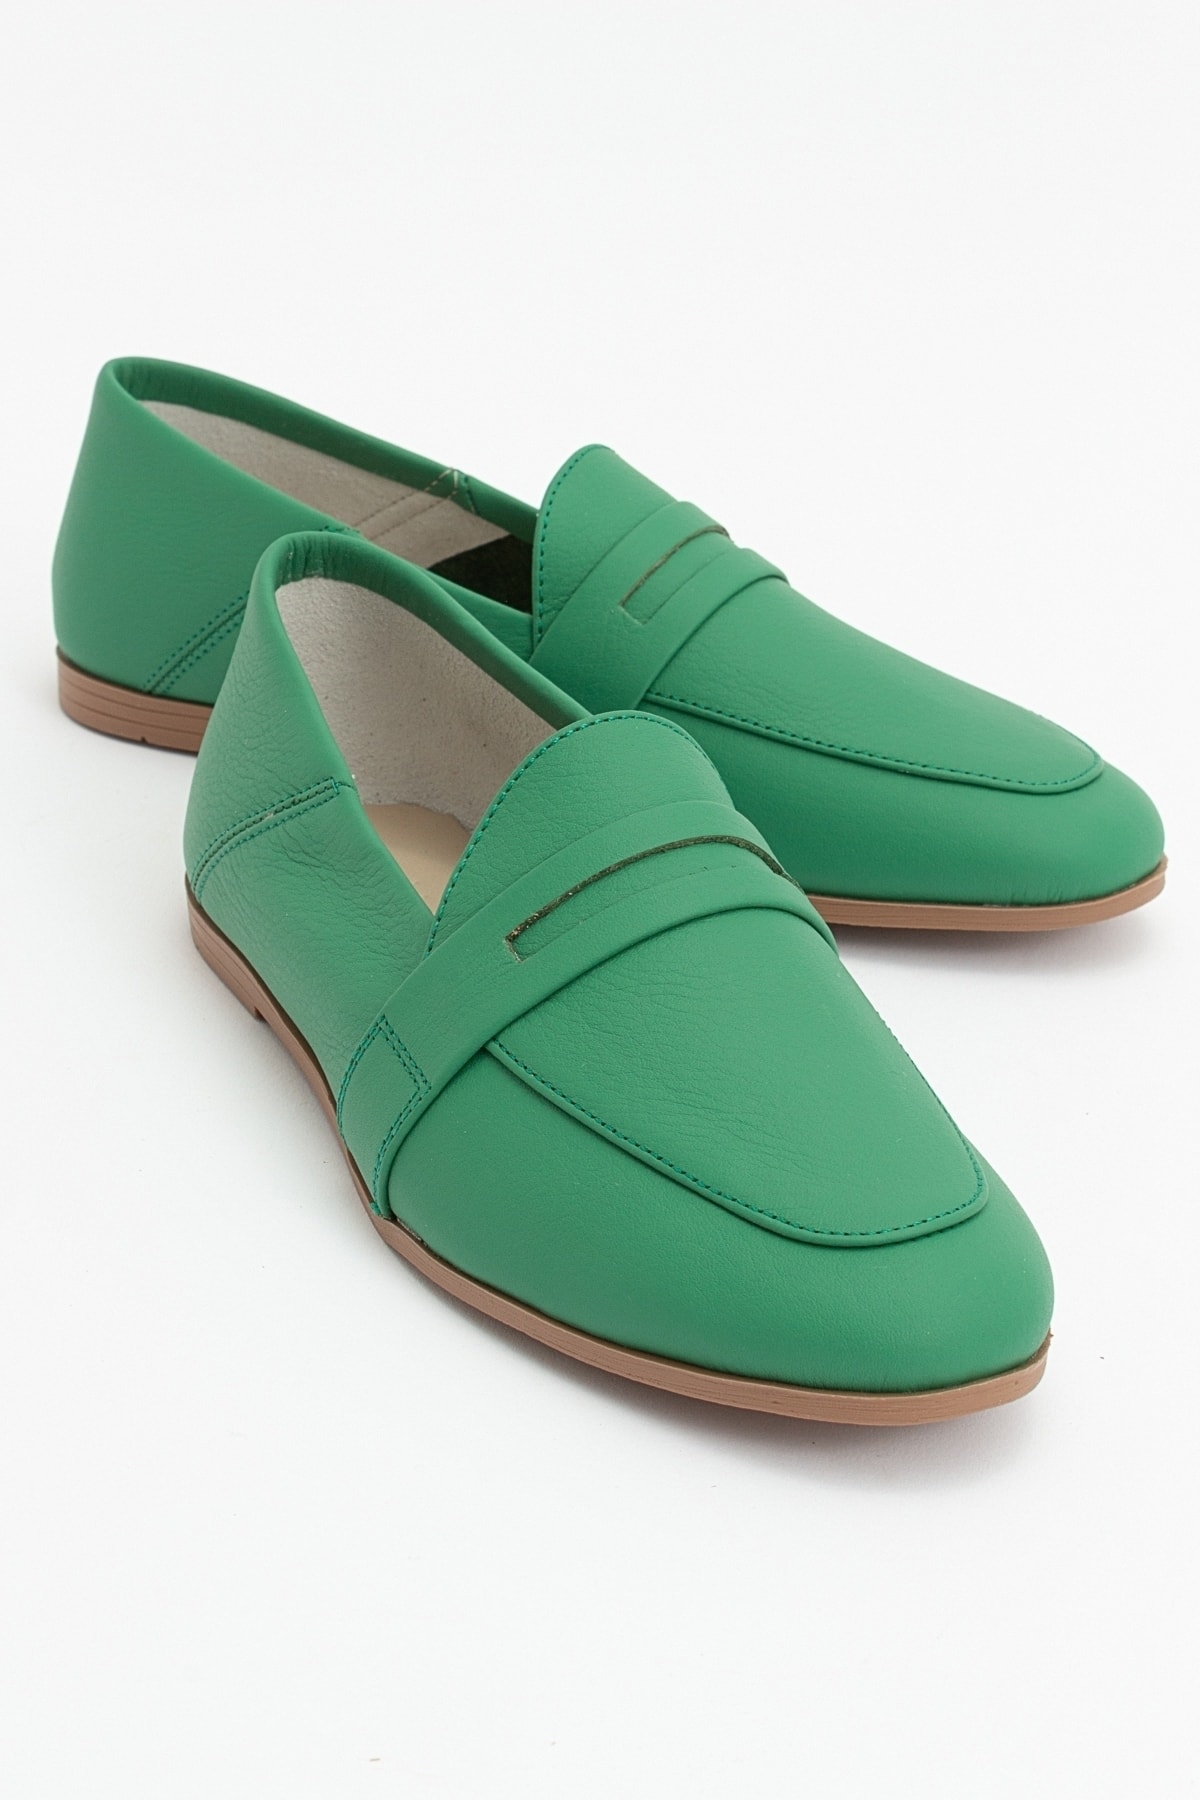 LuviShoes F05 Green Skin Genuine Leather Women's Flats